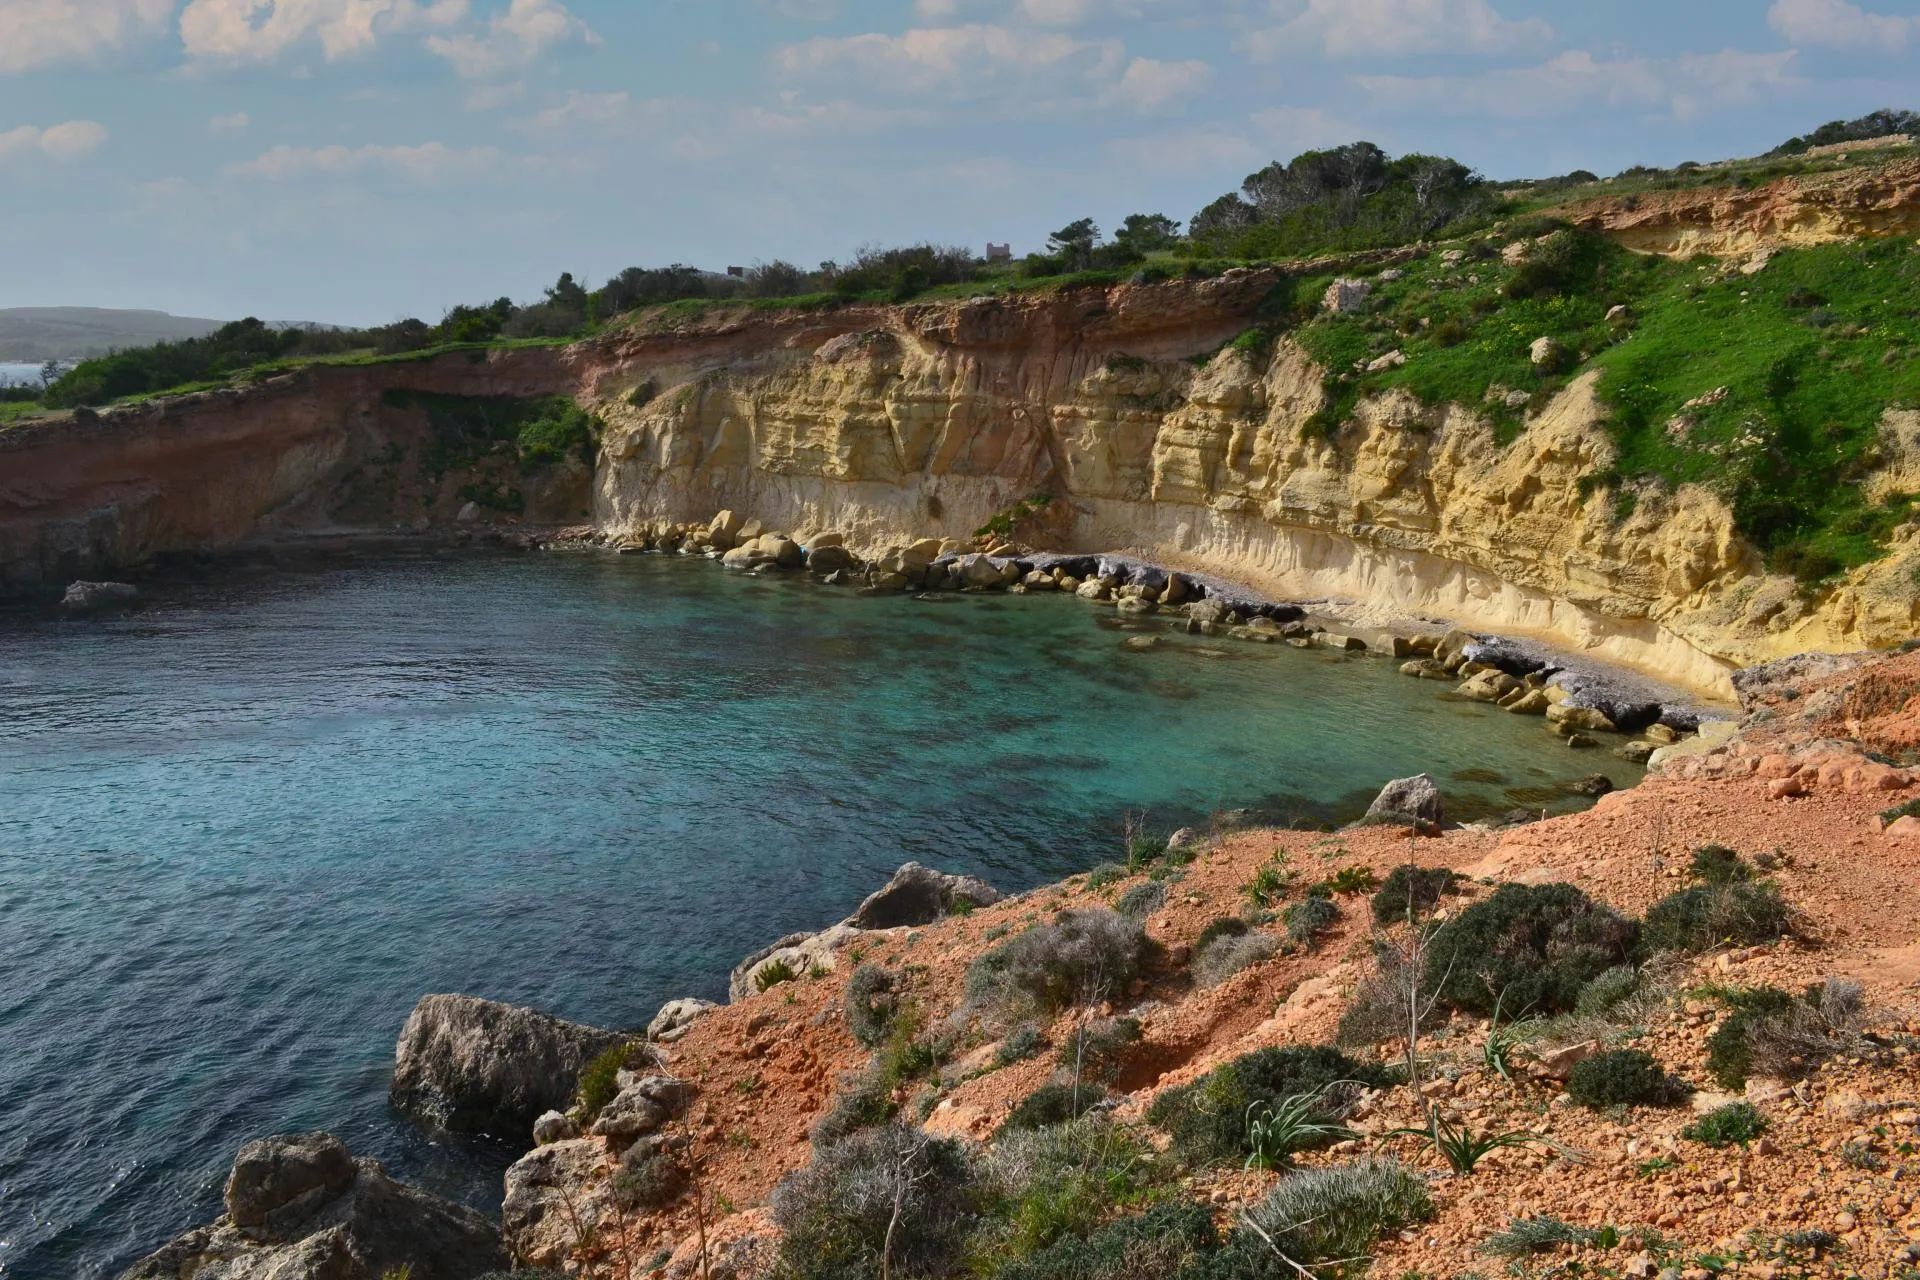 Wall Stone Beach in Malta, Europe | Beaches - Rated 0.8